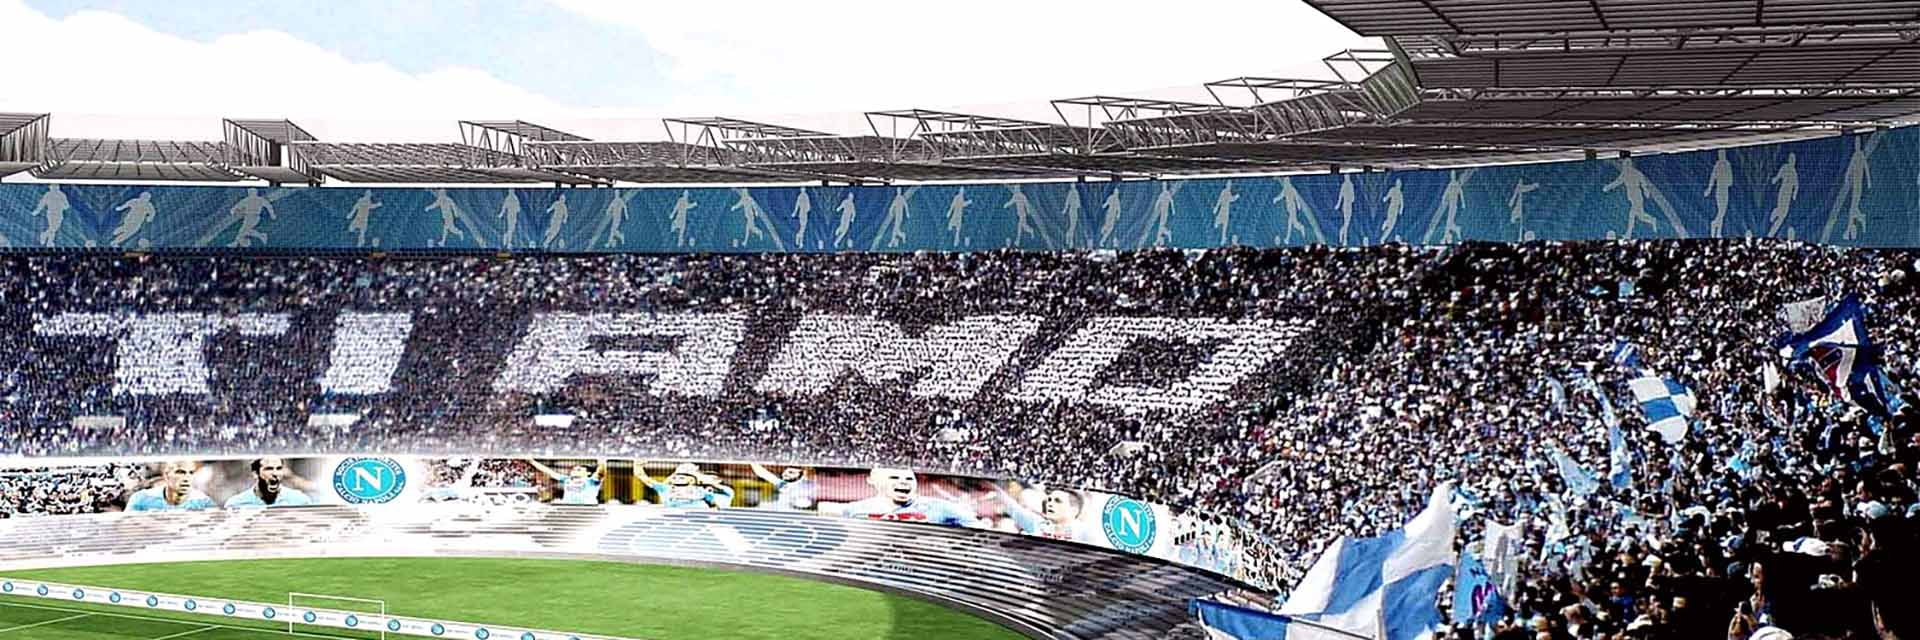 SSC Napoli - Spezia Calcio, 7 Septemberat 0:00